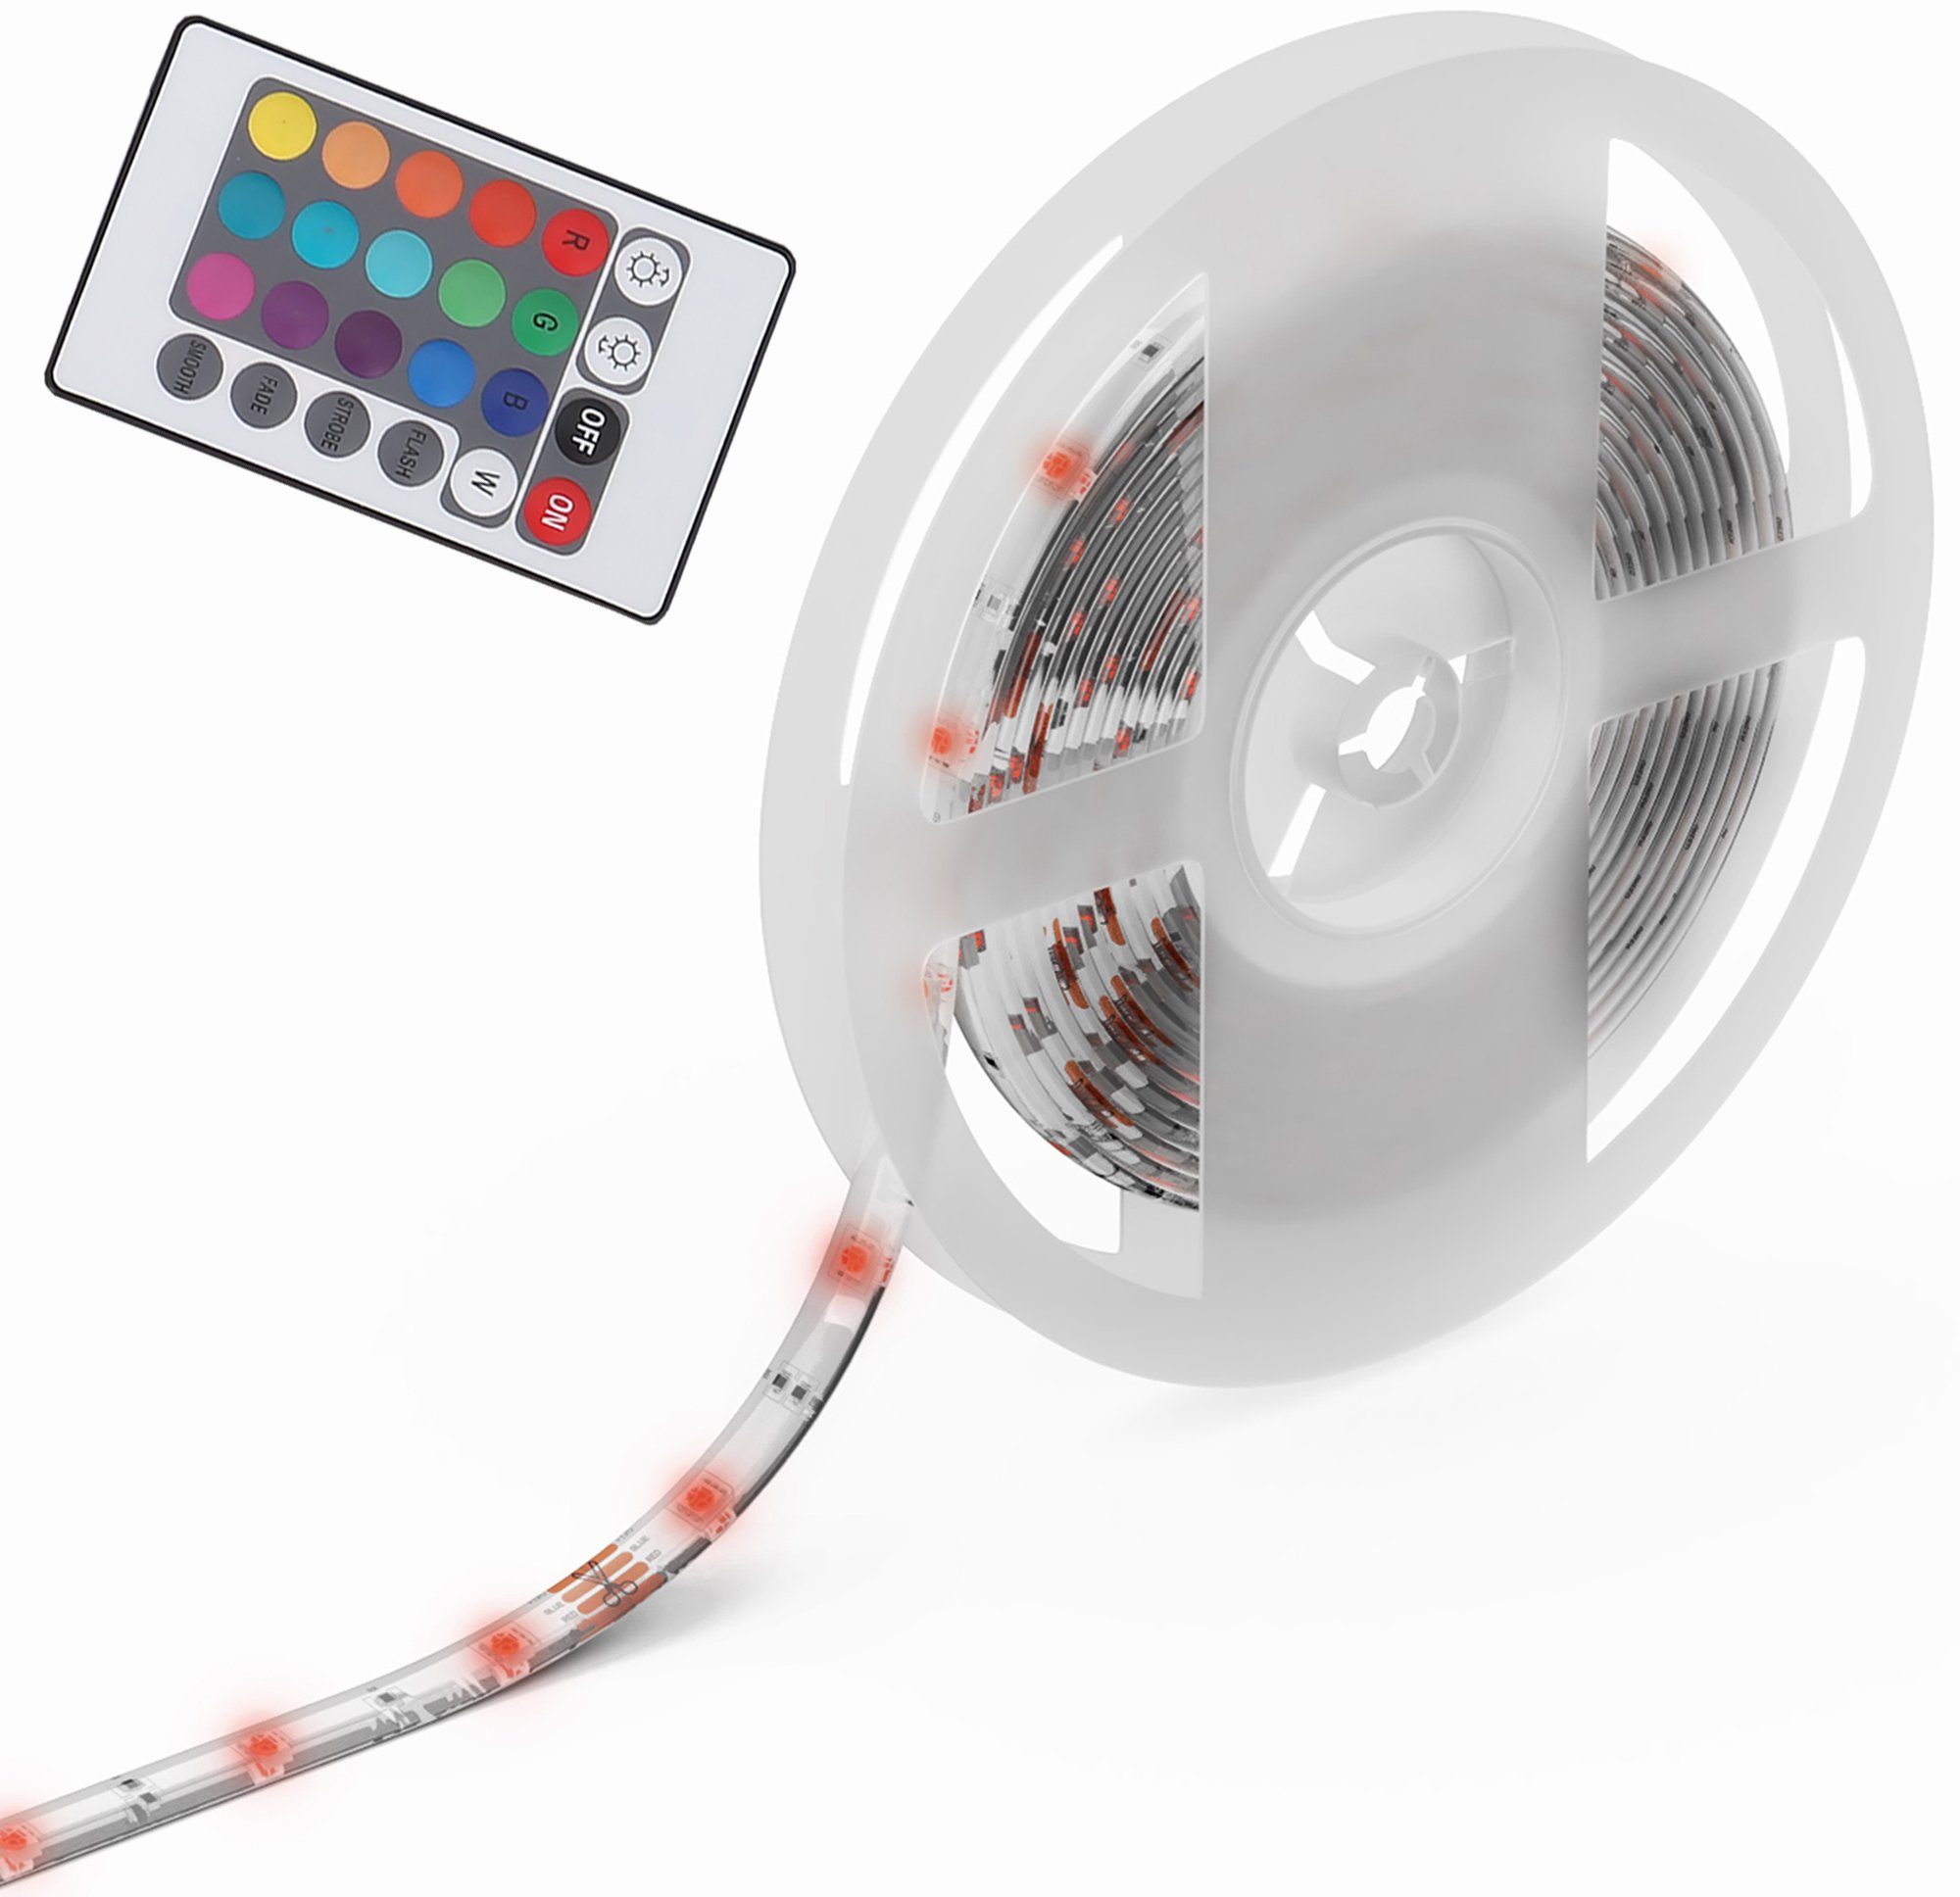 B.K.Licht LED-Streifen Crucis, 5m LED Band/Stripes mit selbstklebend RGB Silikonbeschichtung